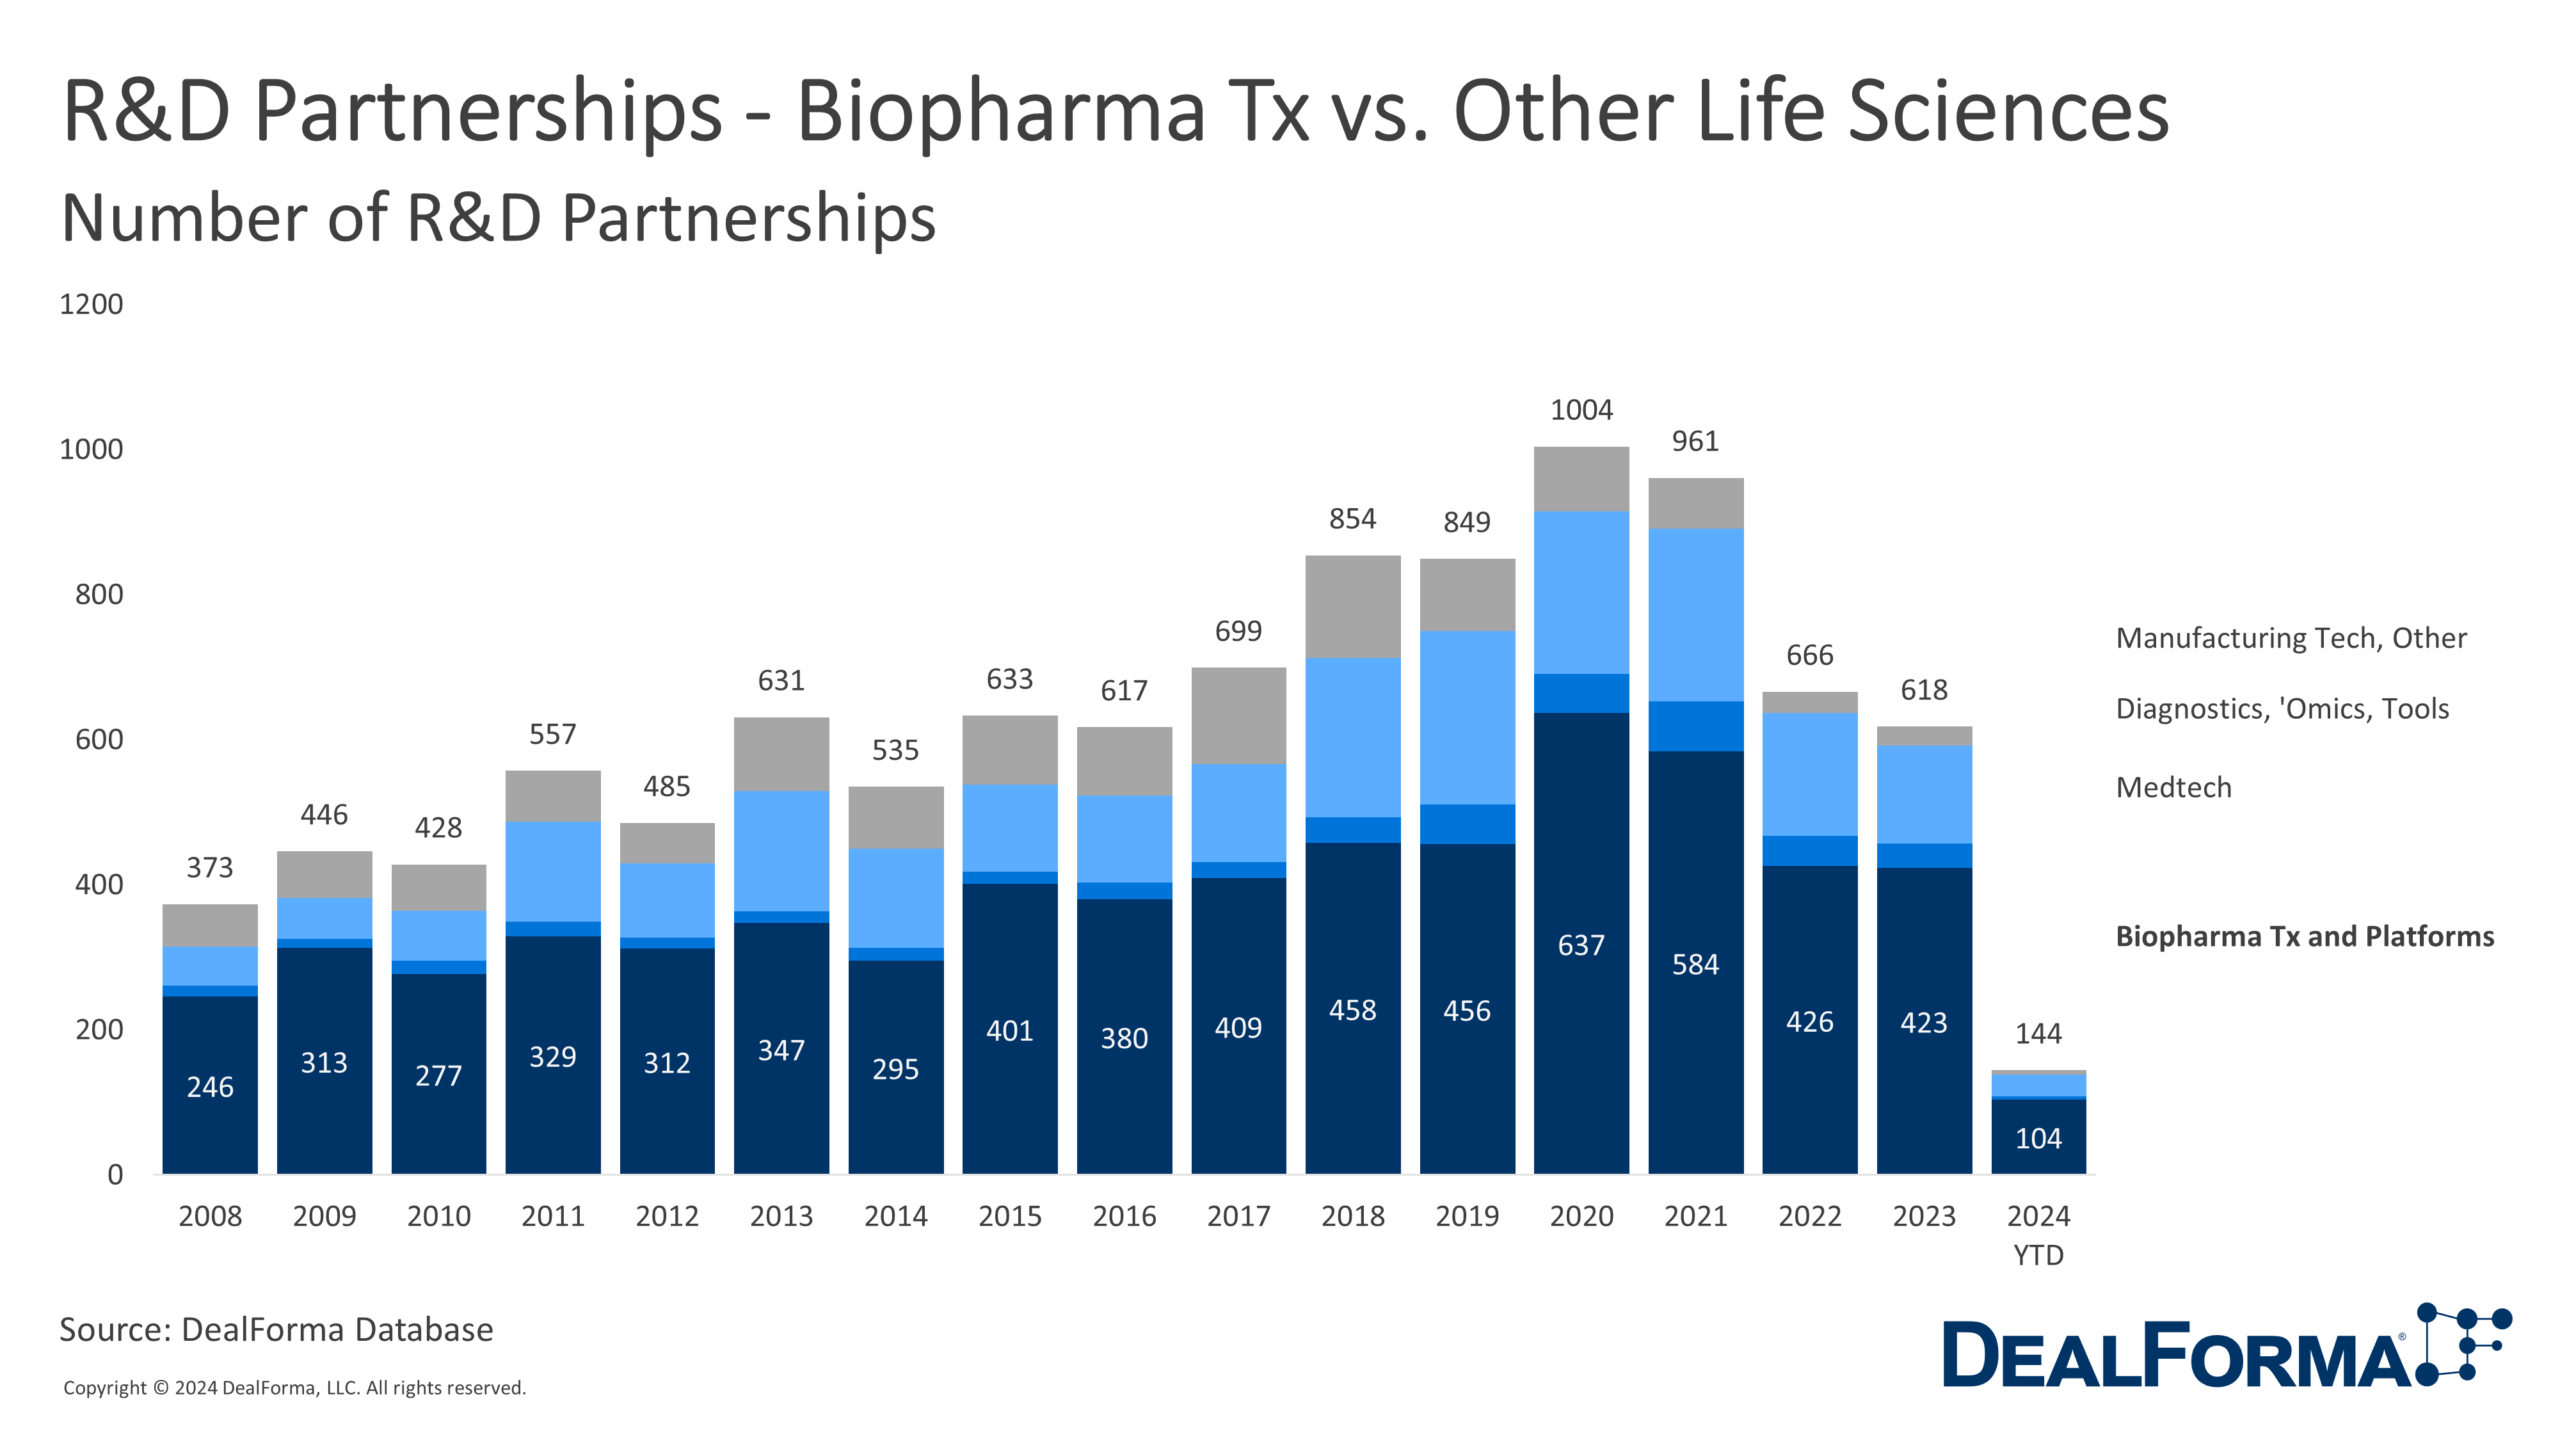 R&D Partnerships - Biopharma Tx vs. Other Life Sciences